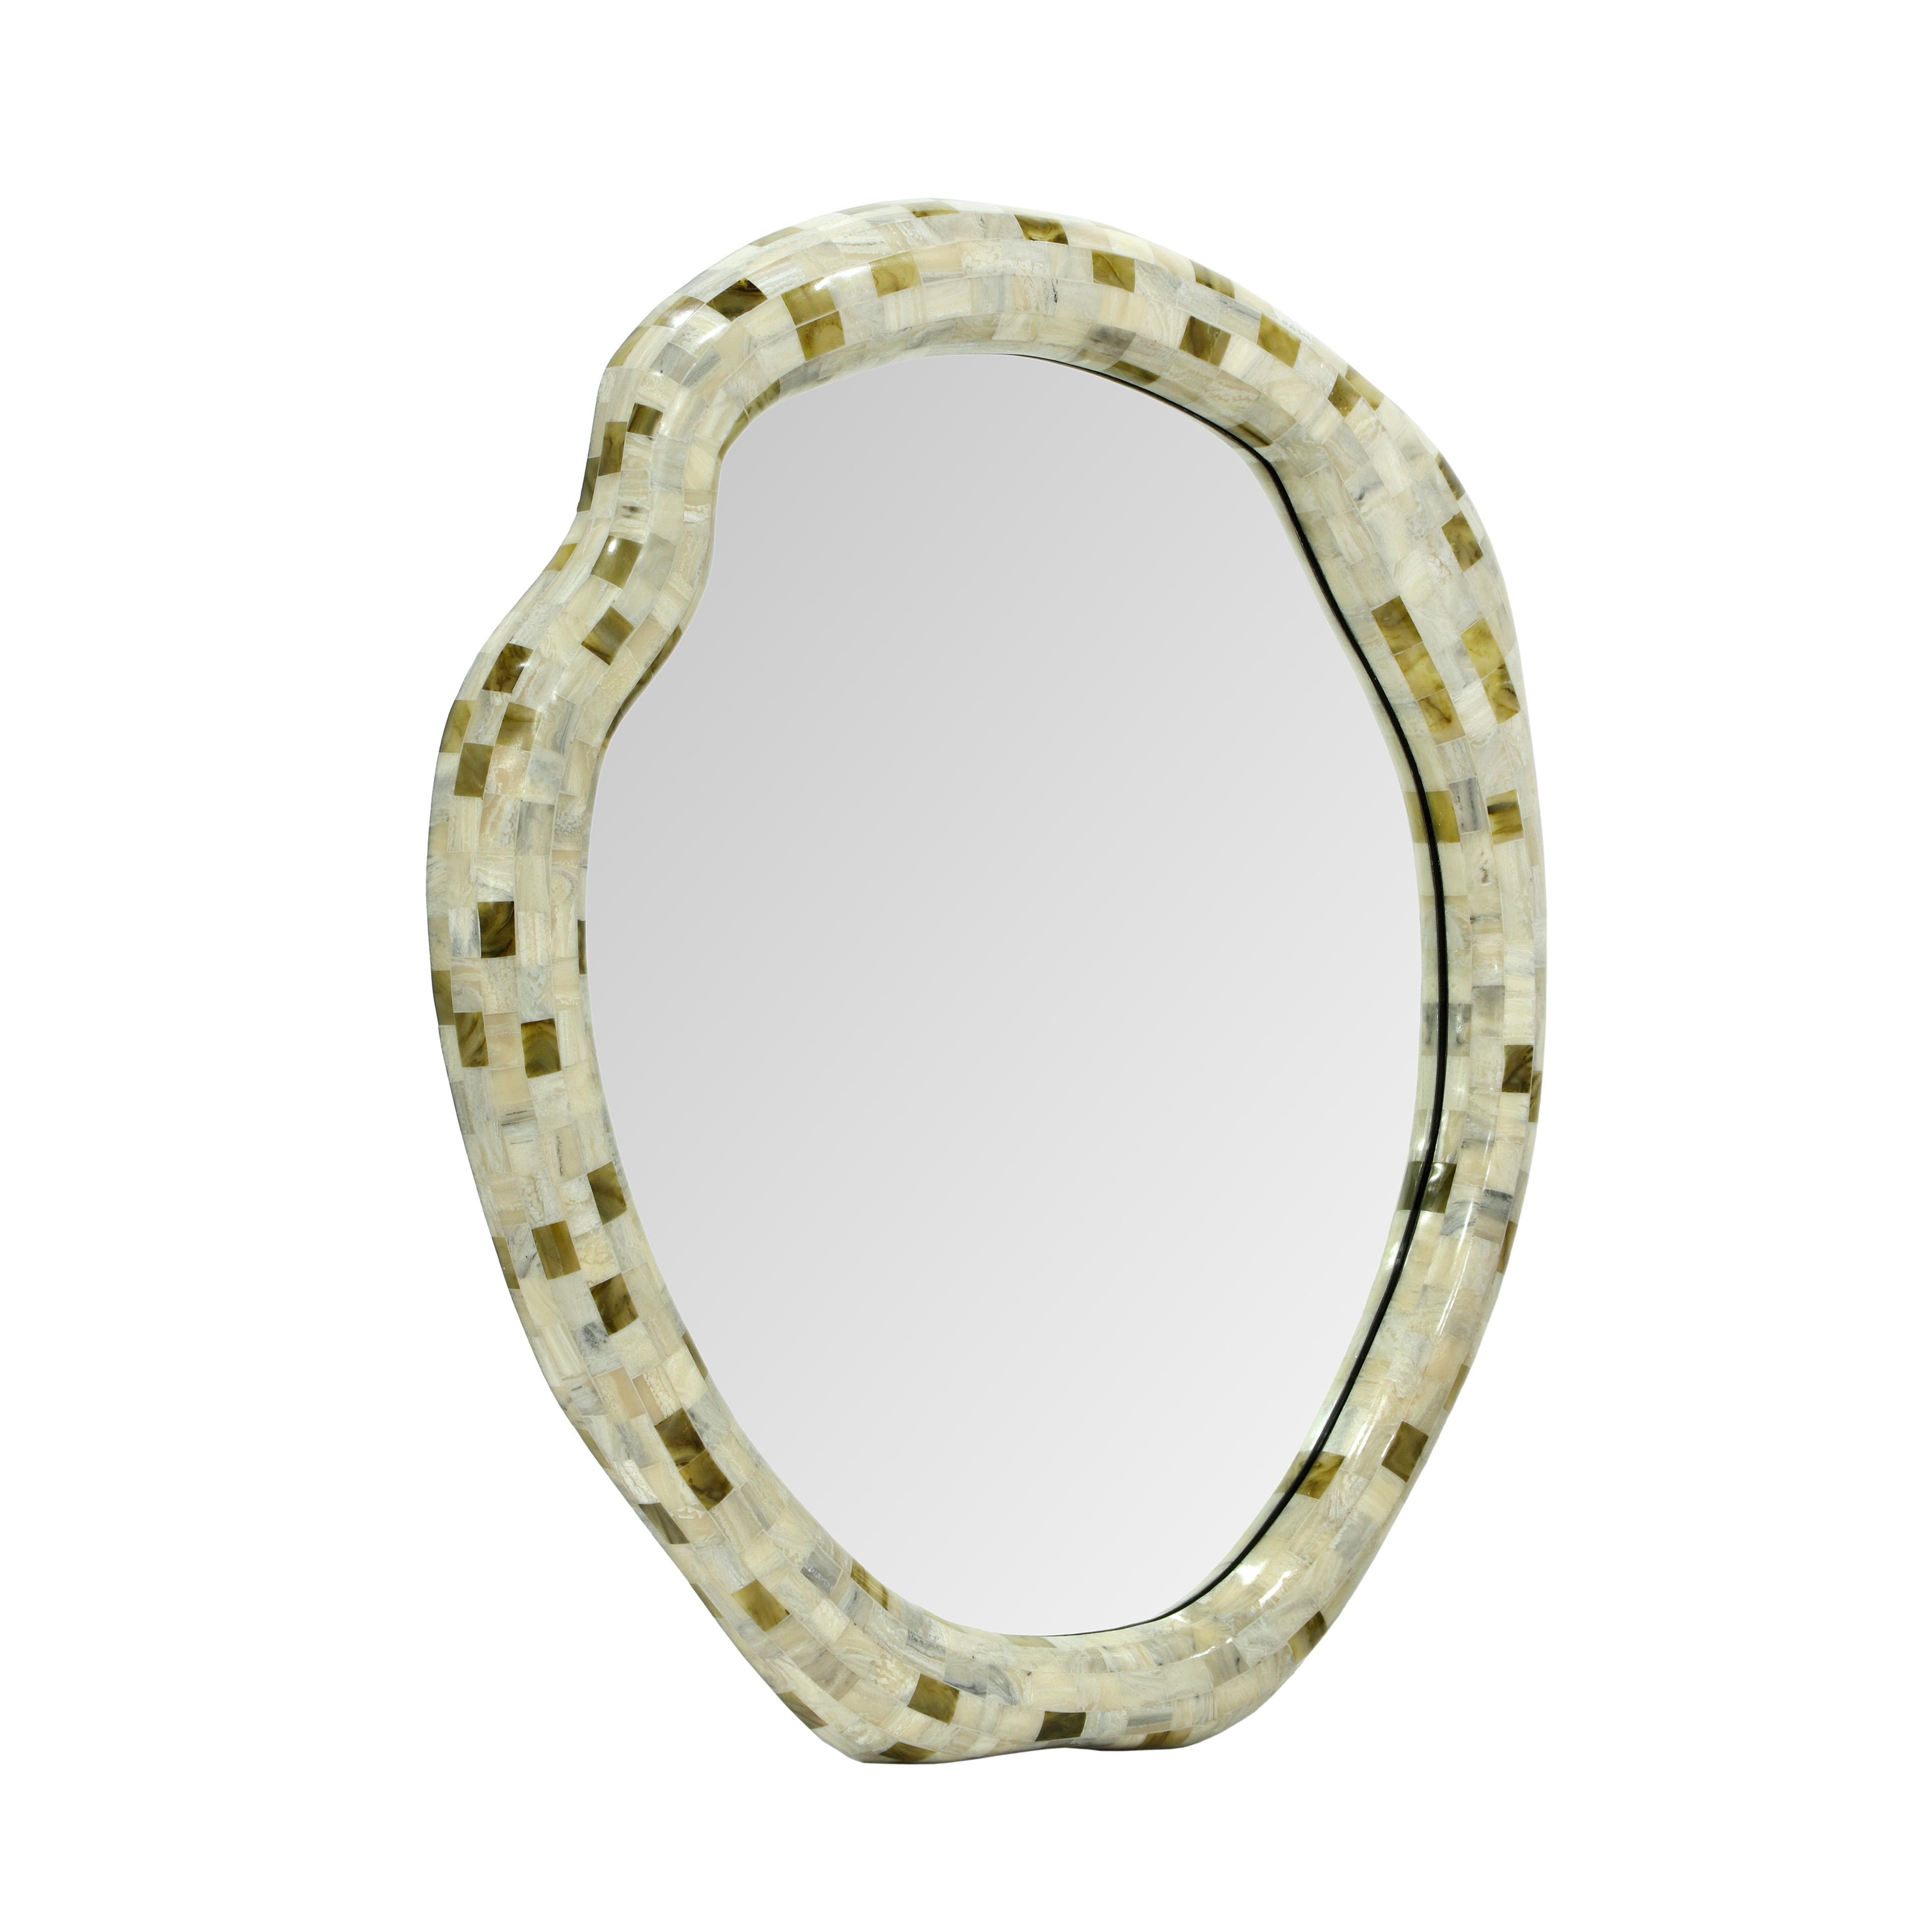 Josephine Wall Mirror - Image 1